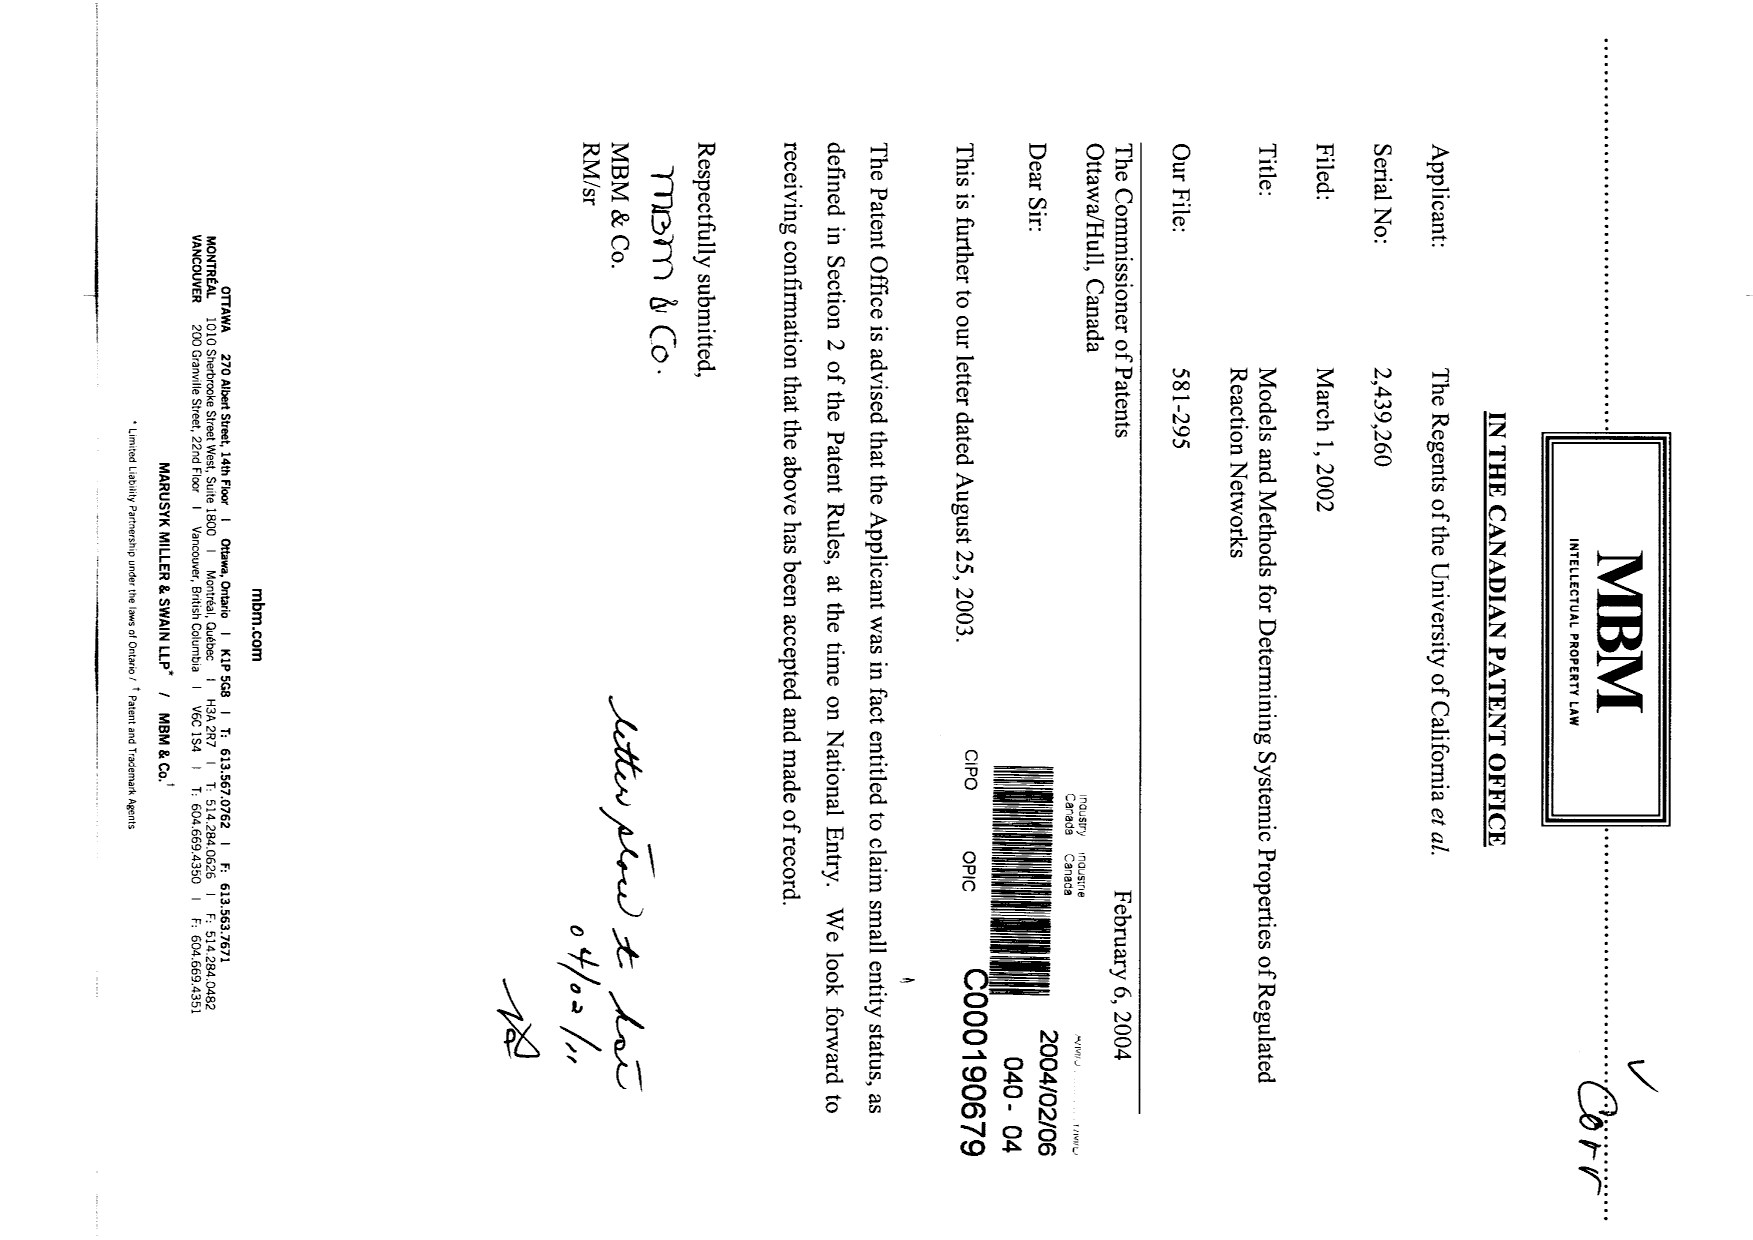 Canadian Patent Document 2439260. Correspondence 20031206. Image 1 of 1